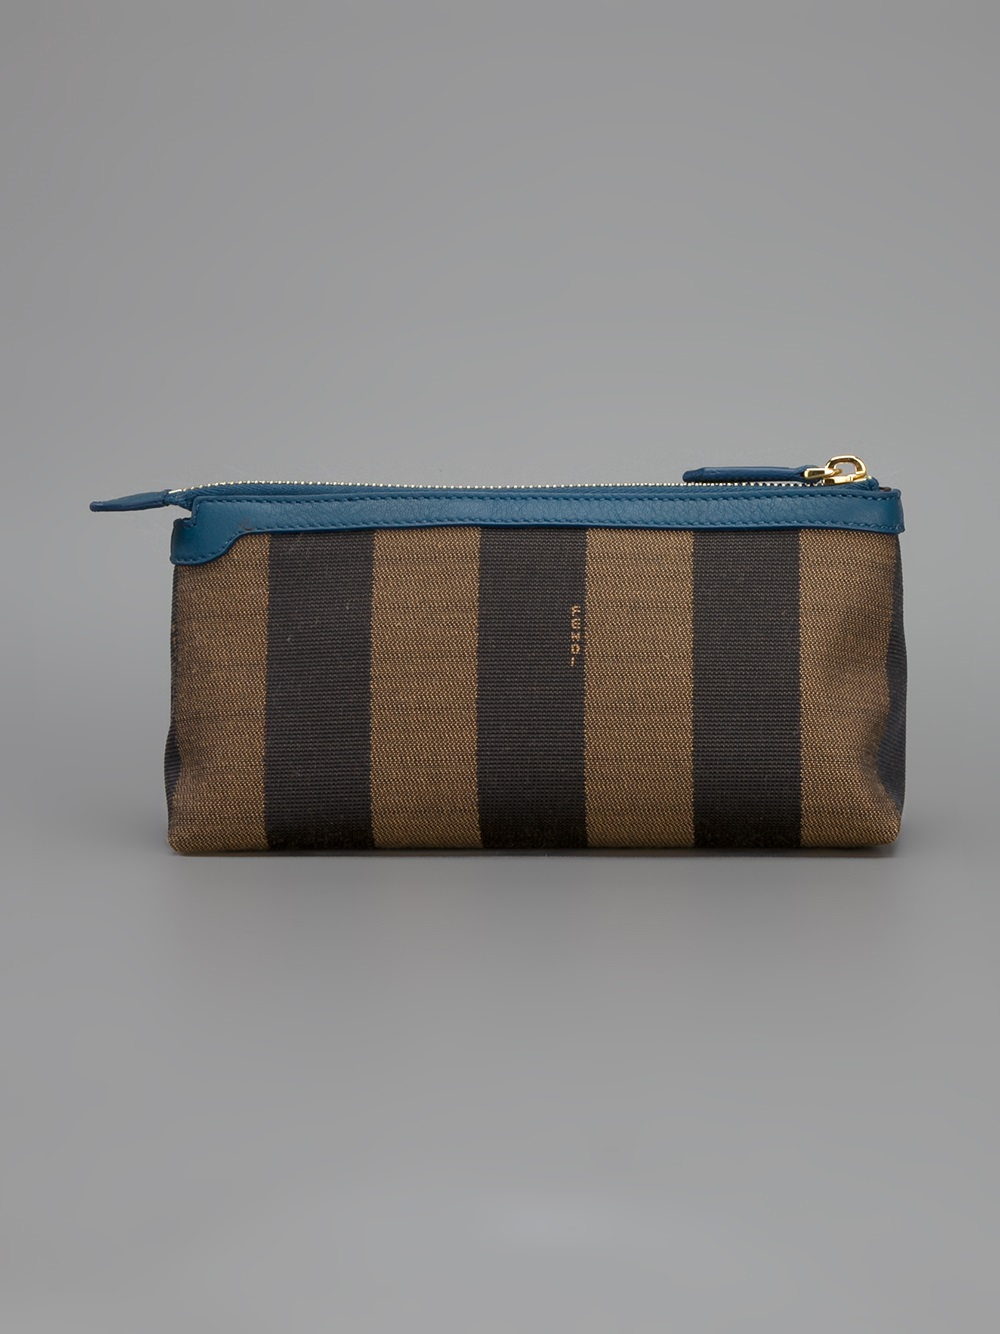 Lyst - Fendi Striped Makeup Bag in Brown